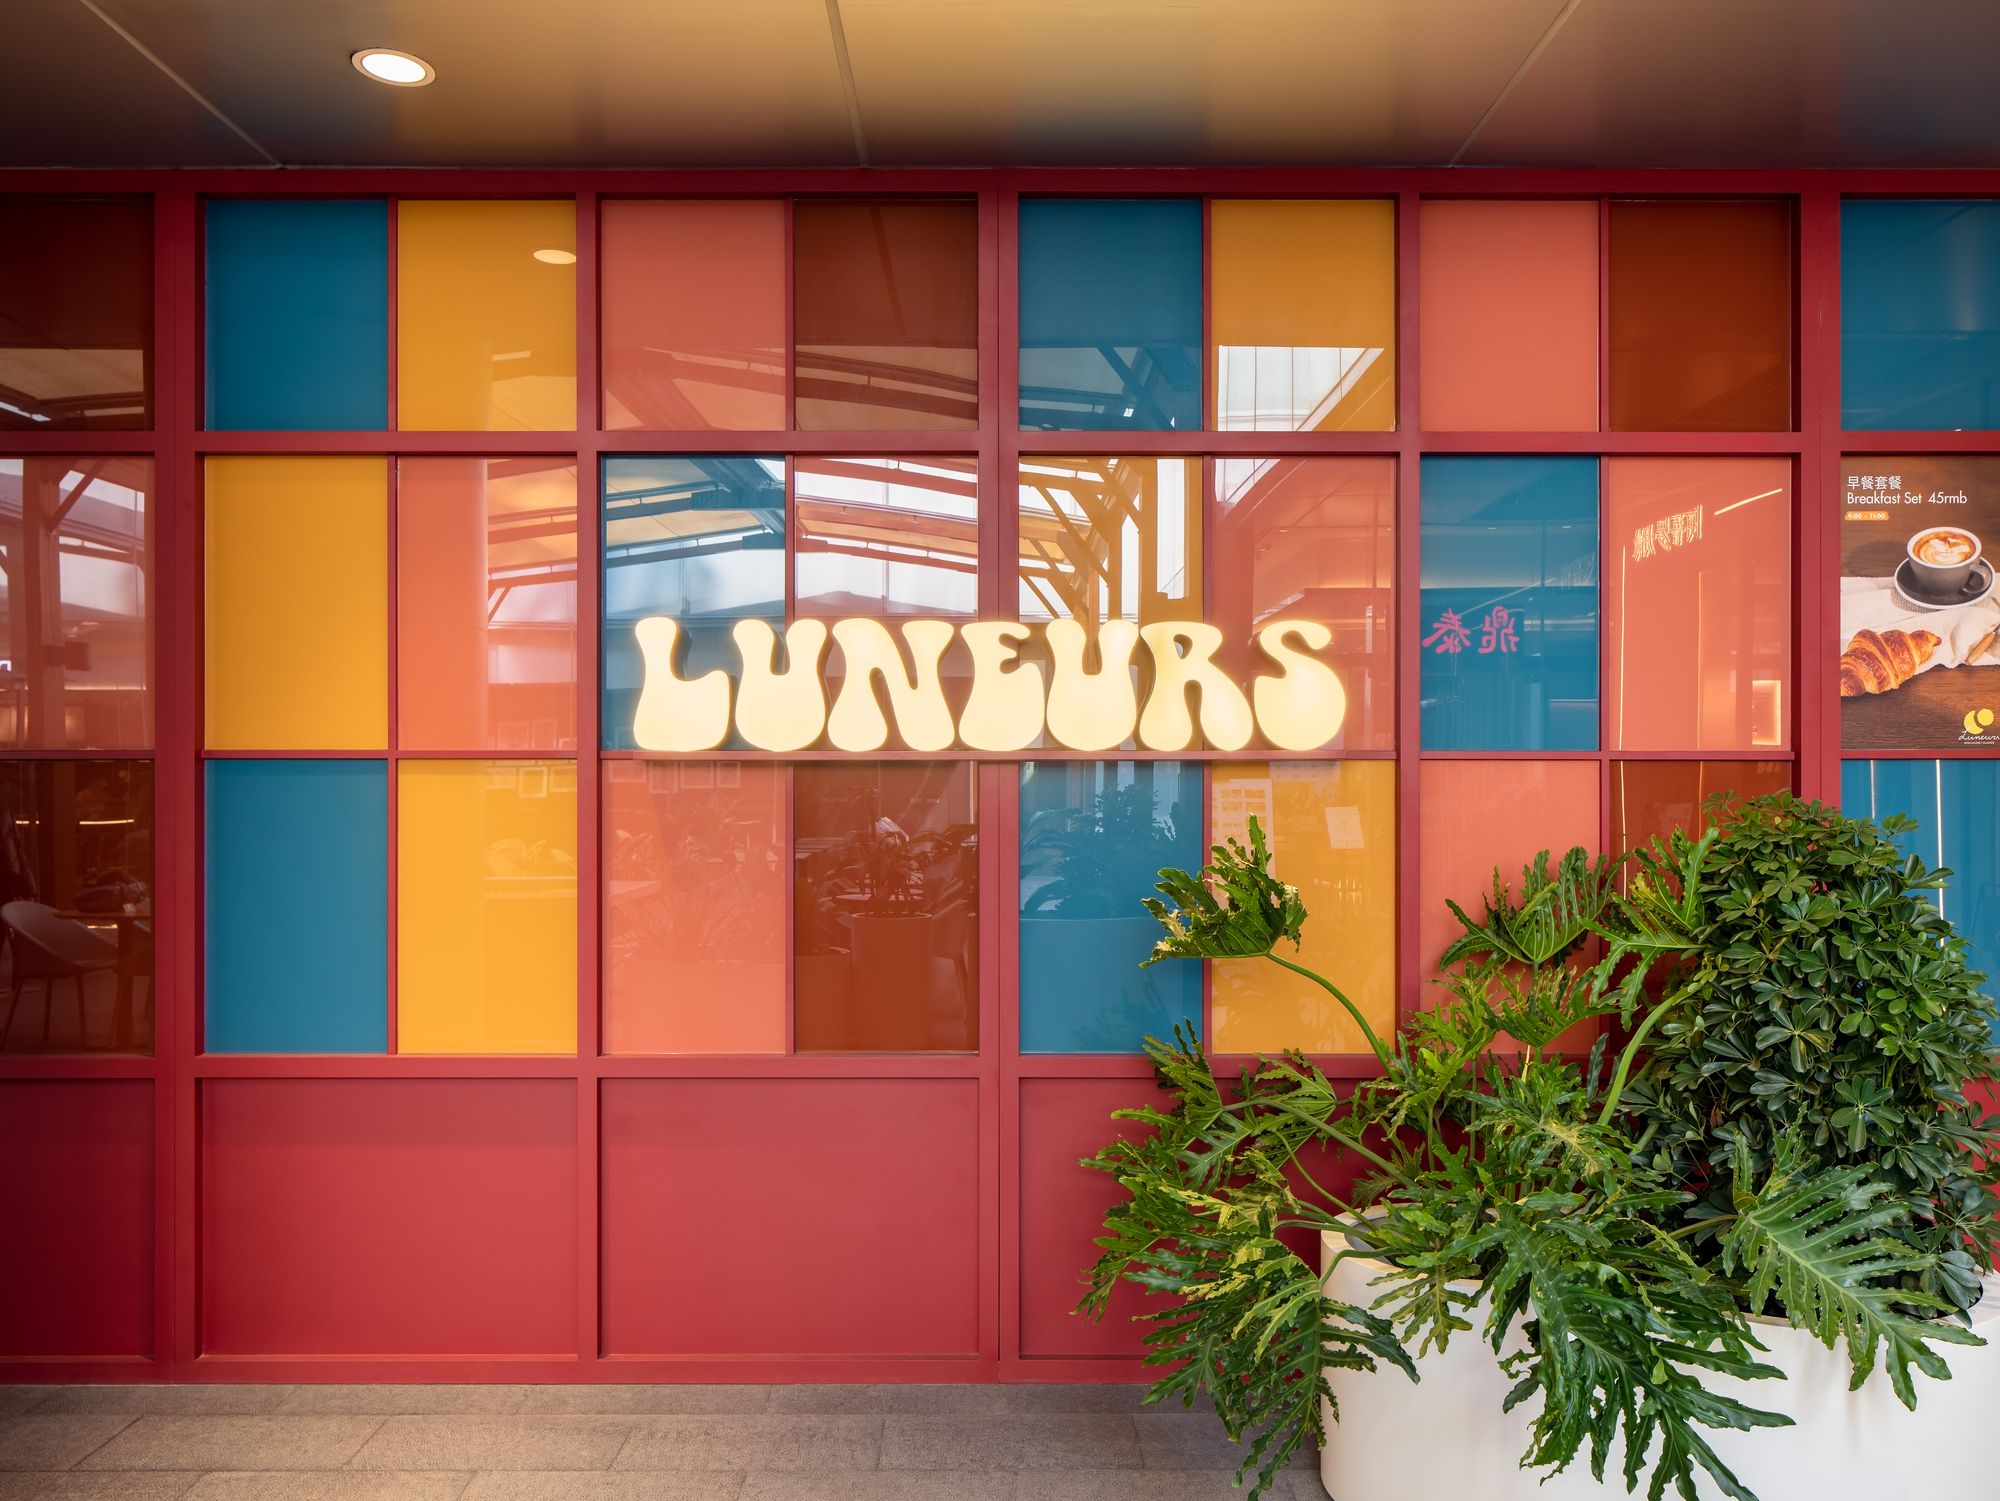 Luneuers Alunissage面包店|ART-Arrakis | 建筑室内设计的创新与灵感